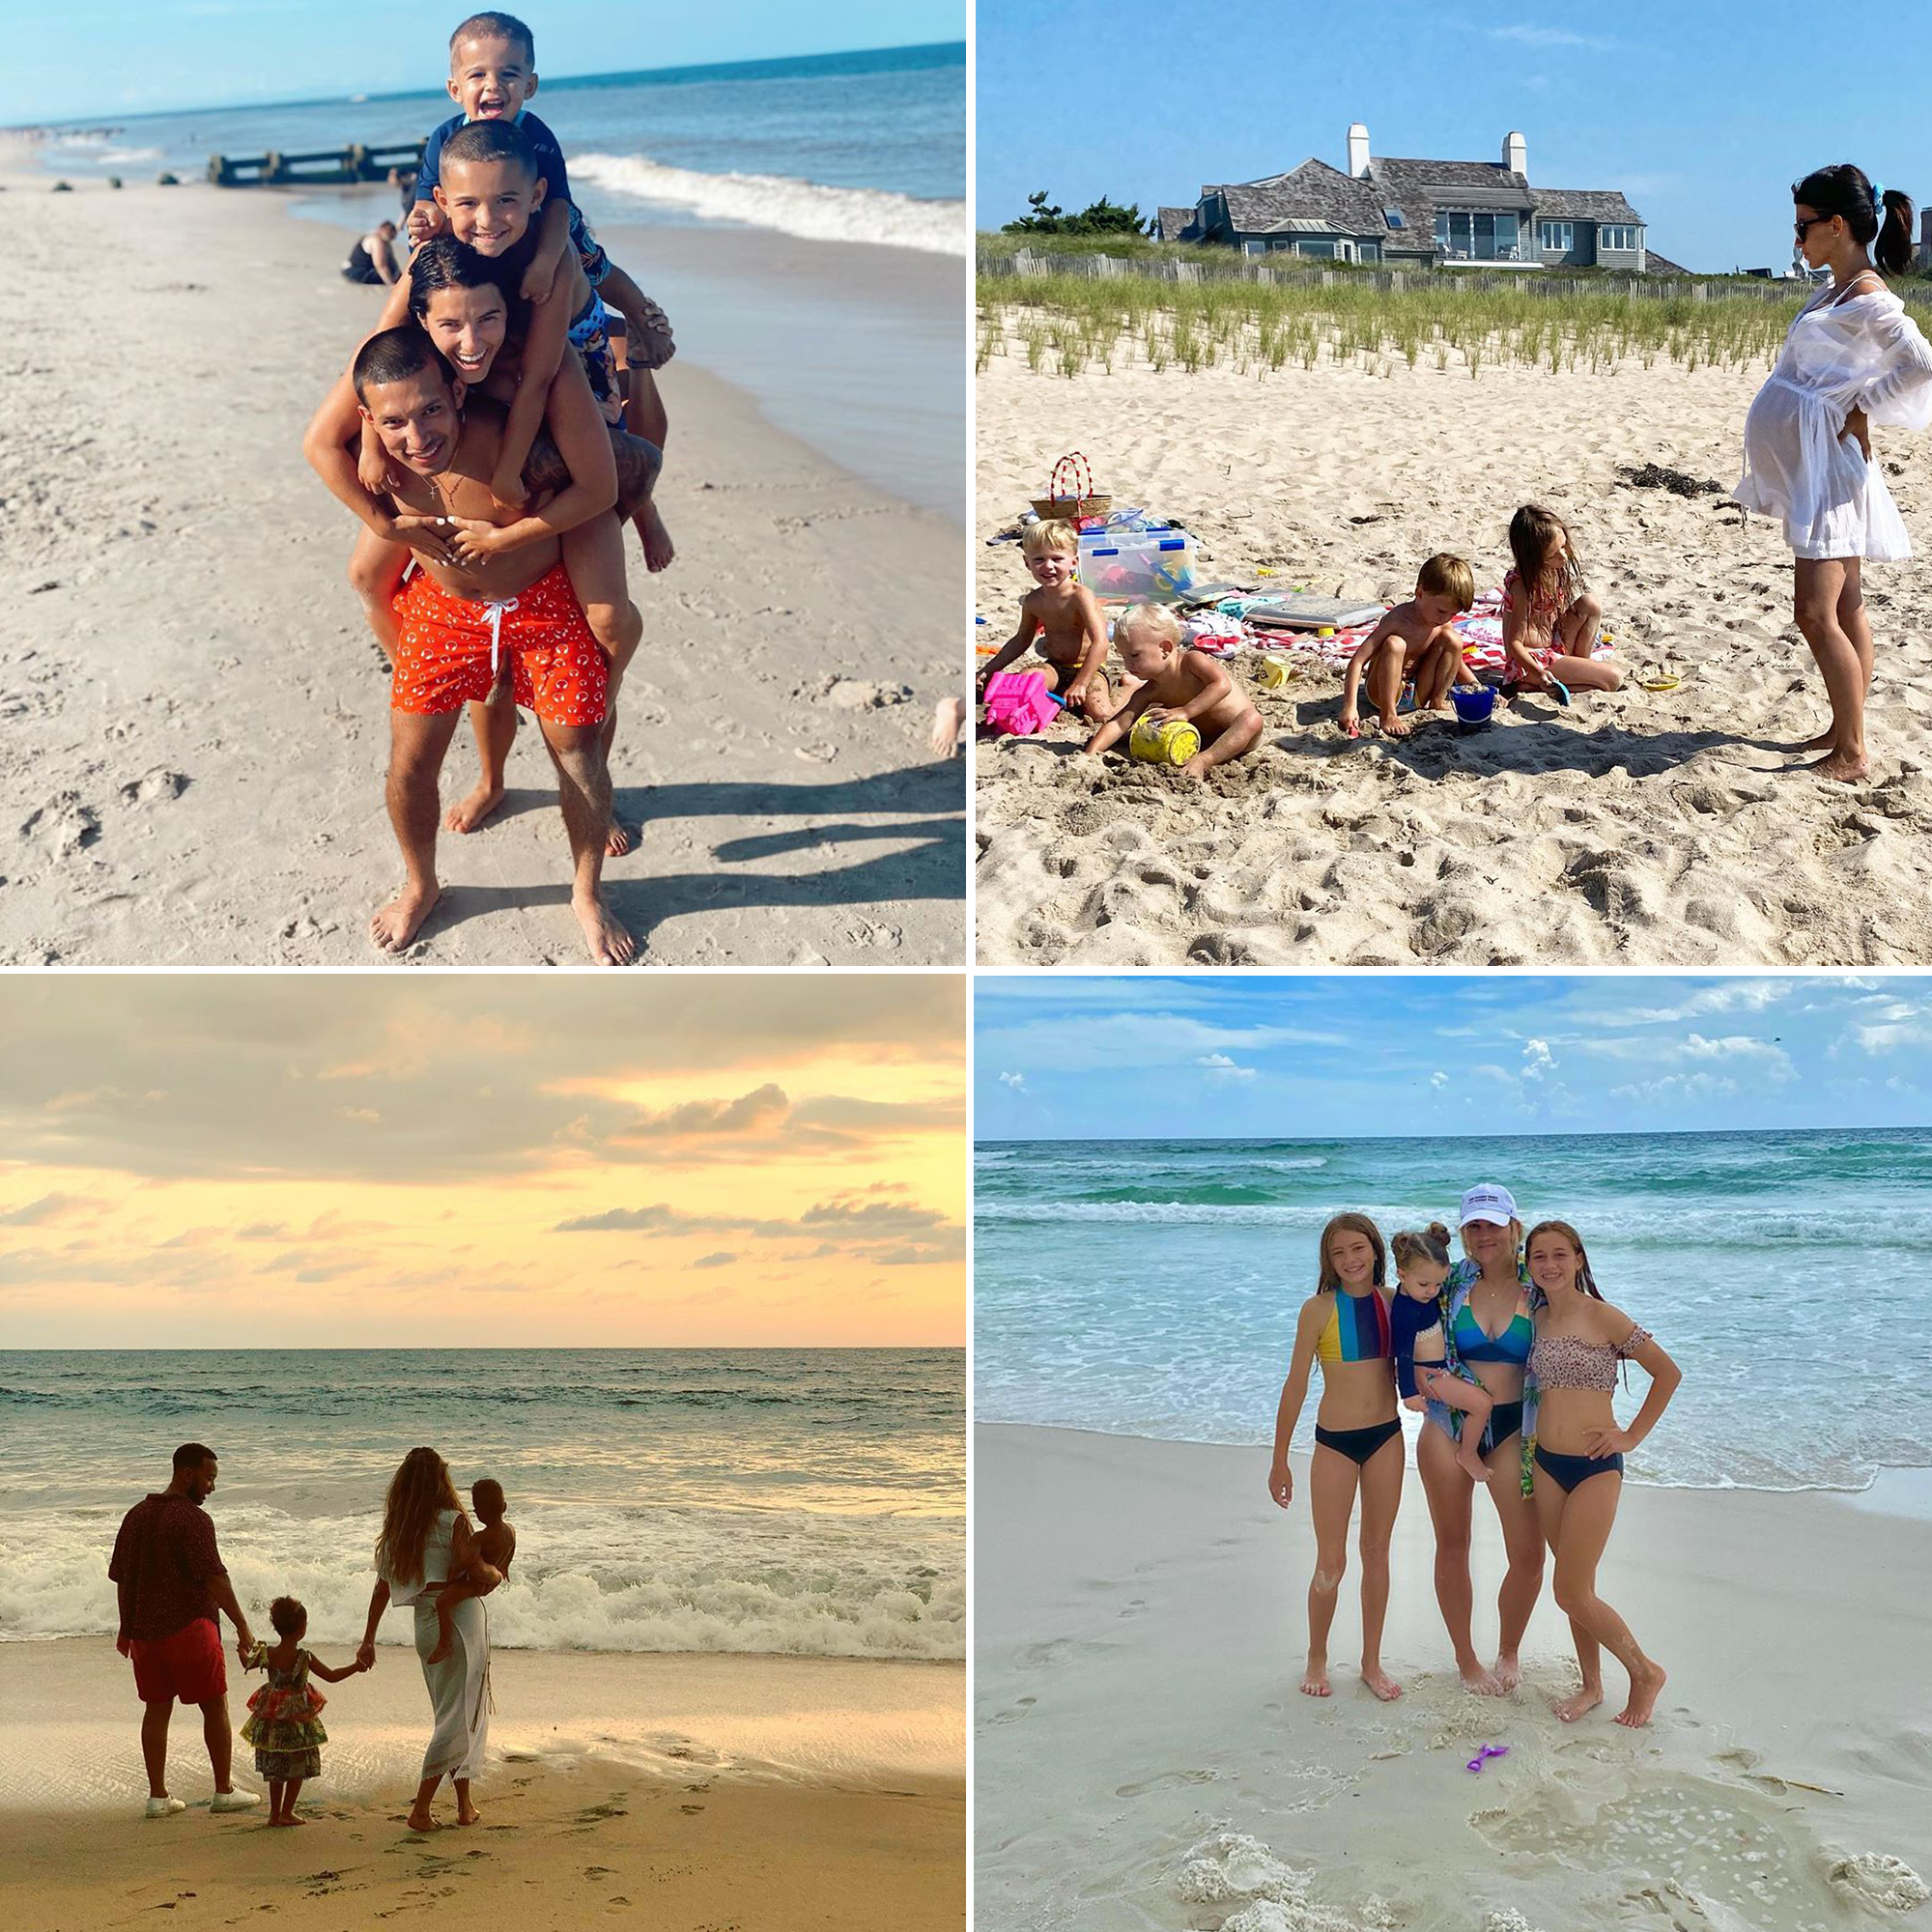 Naturist Nudist Couple - Celeb Families' Beach Trips Amid Coronavirus Pandemic: Pics